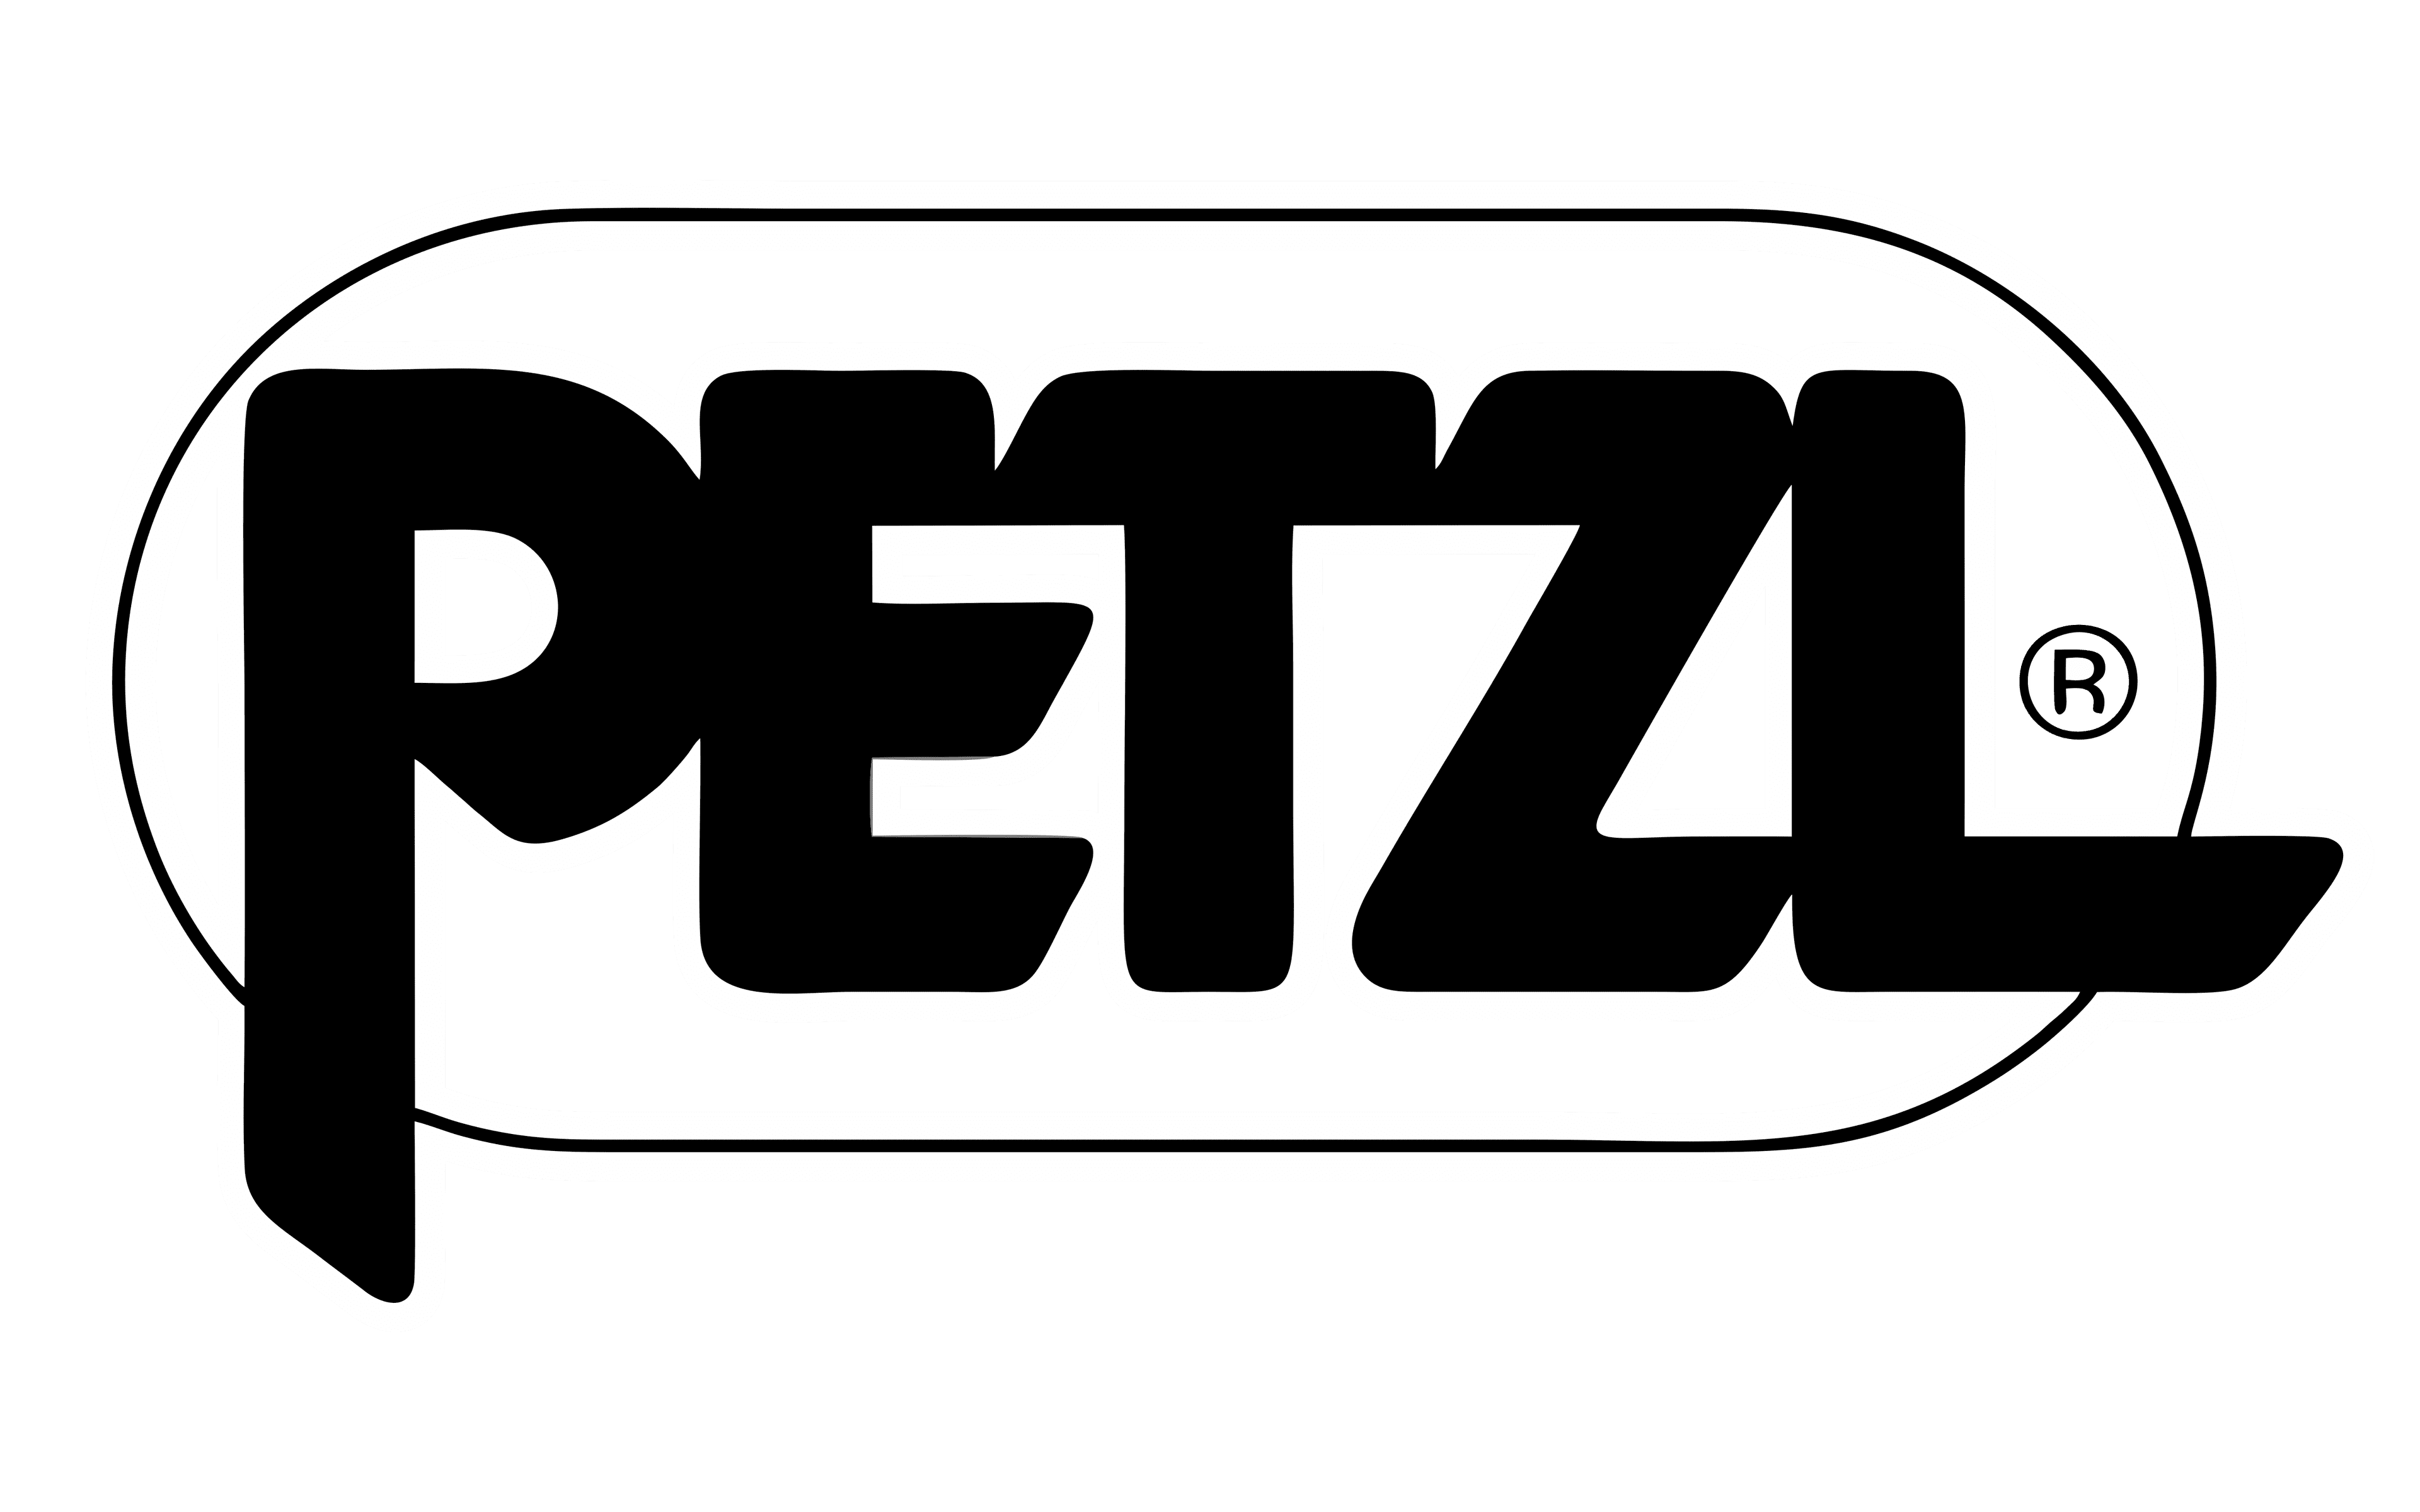 10% off all Petzl items